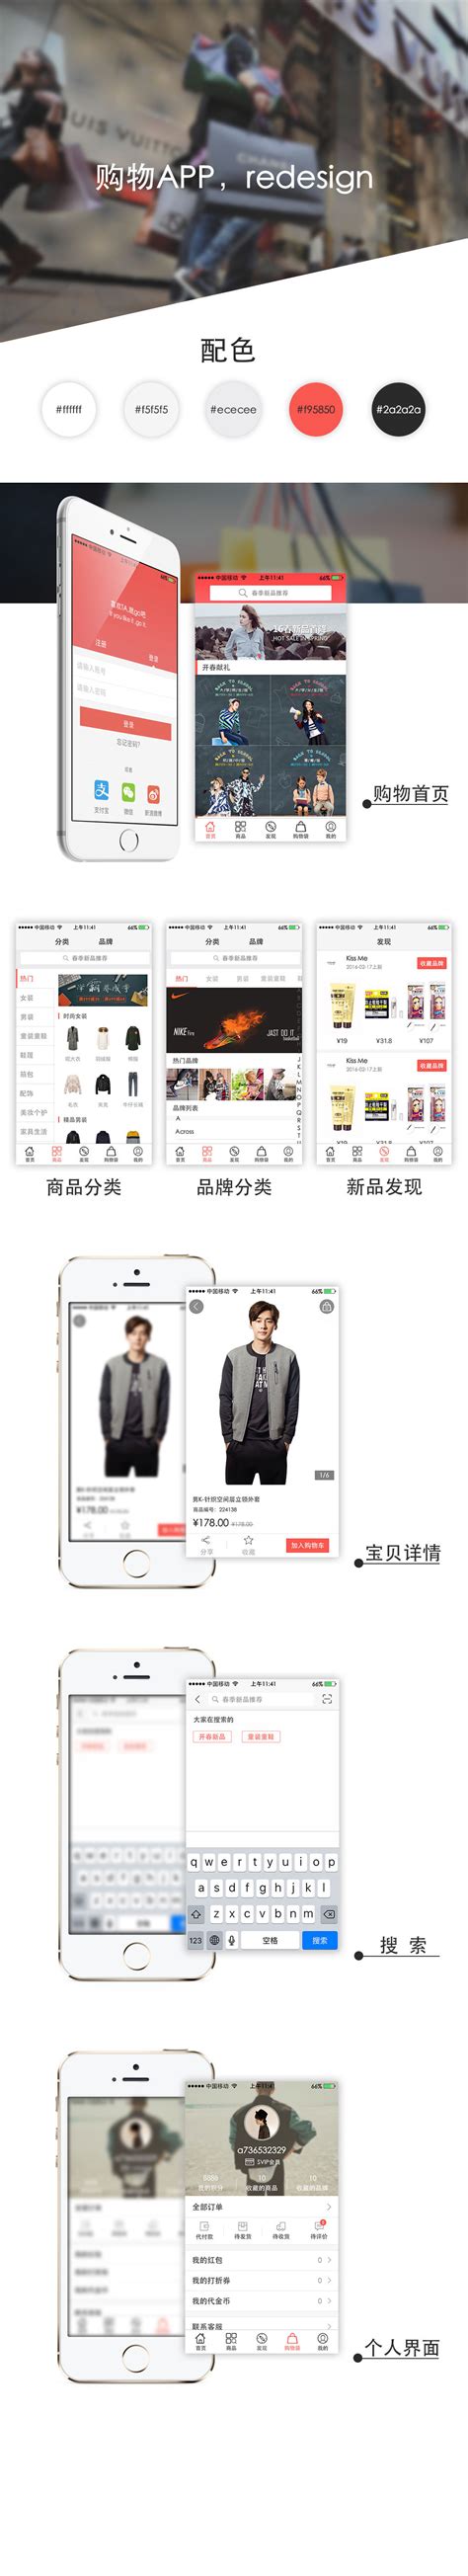 UI设计购物app主页面模板素材-正版图片401586510-摄图网